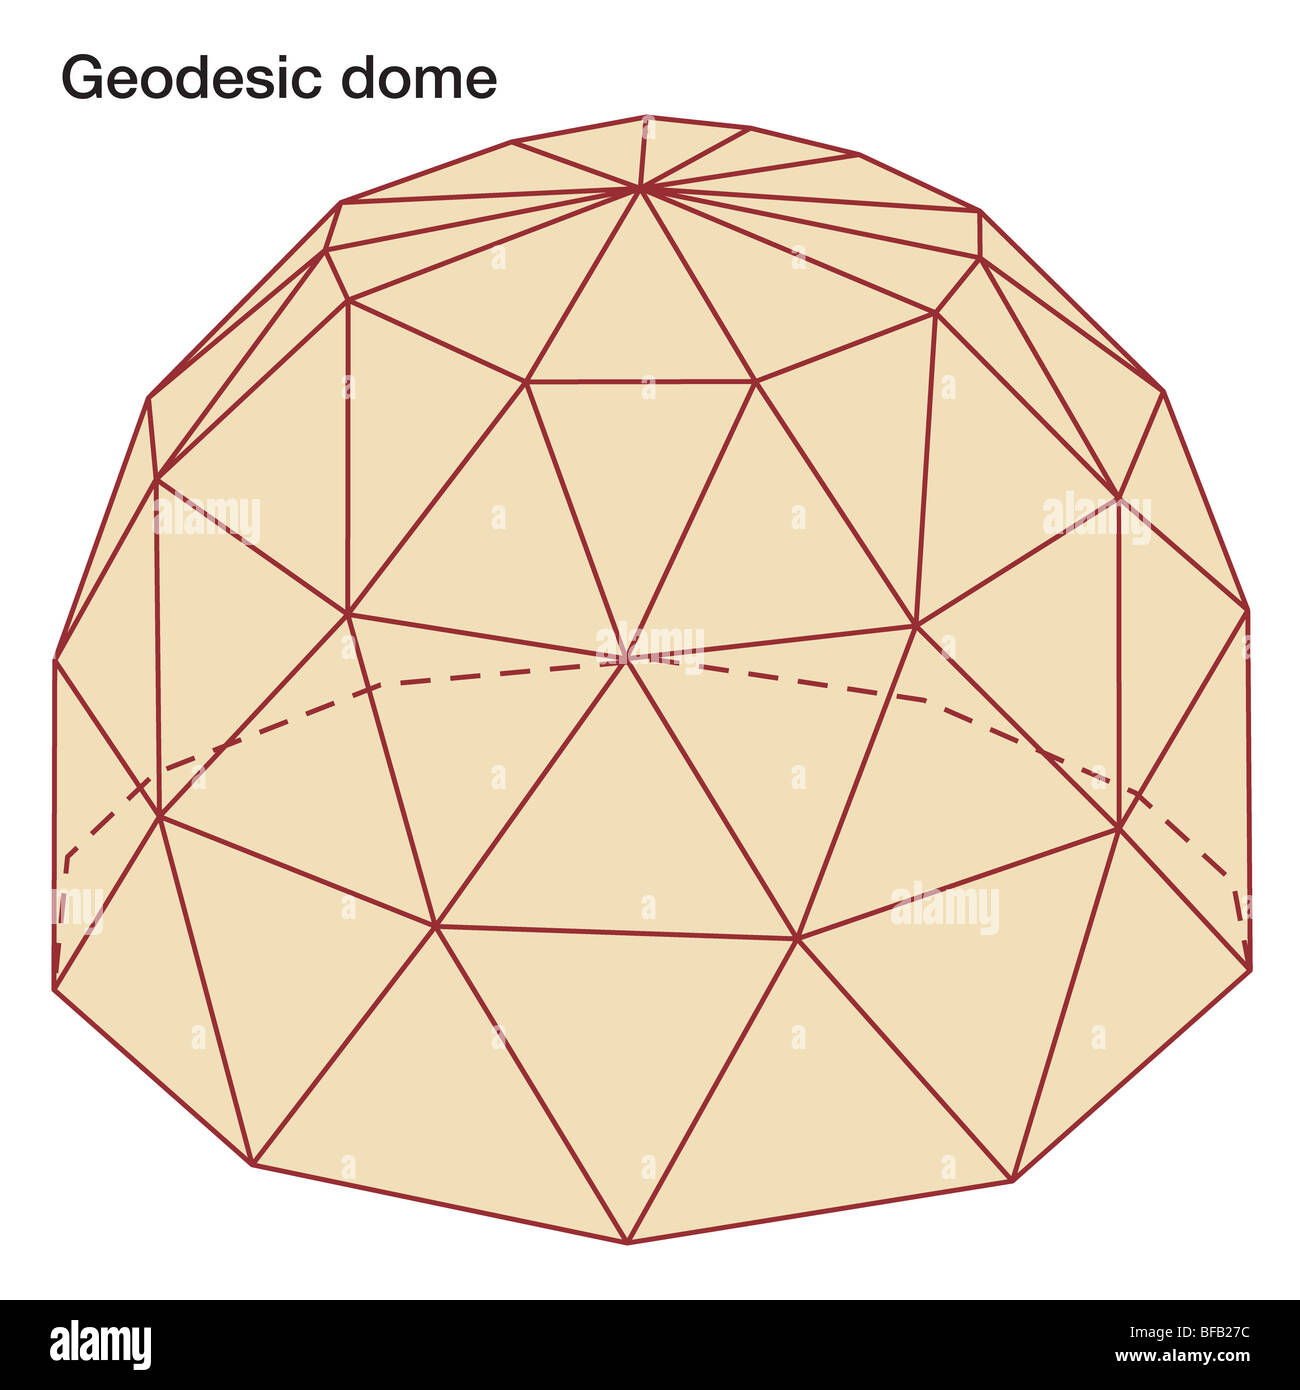 Geodesic dome Stock Photo